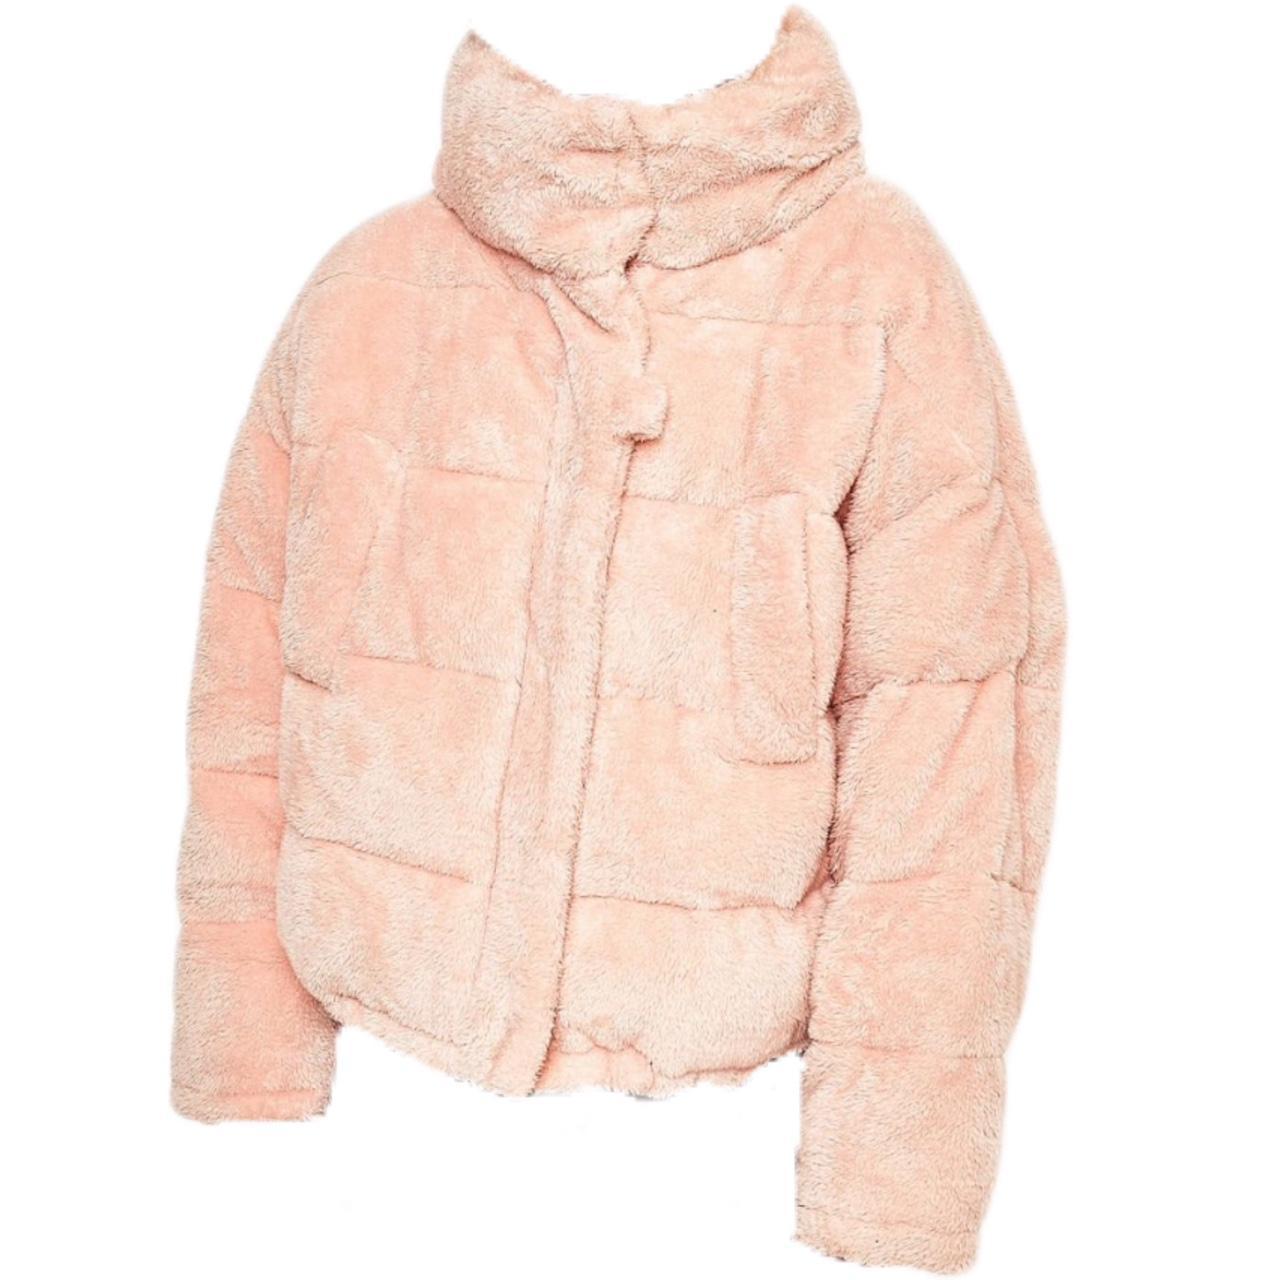 Urban Outfitters Women's Pink Coat | Depop